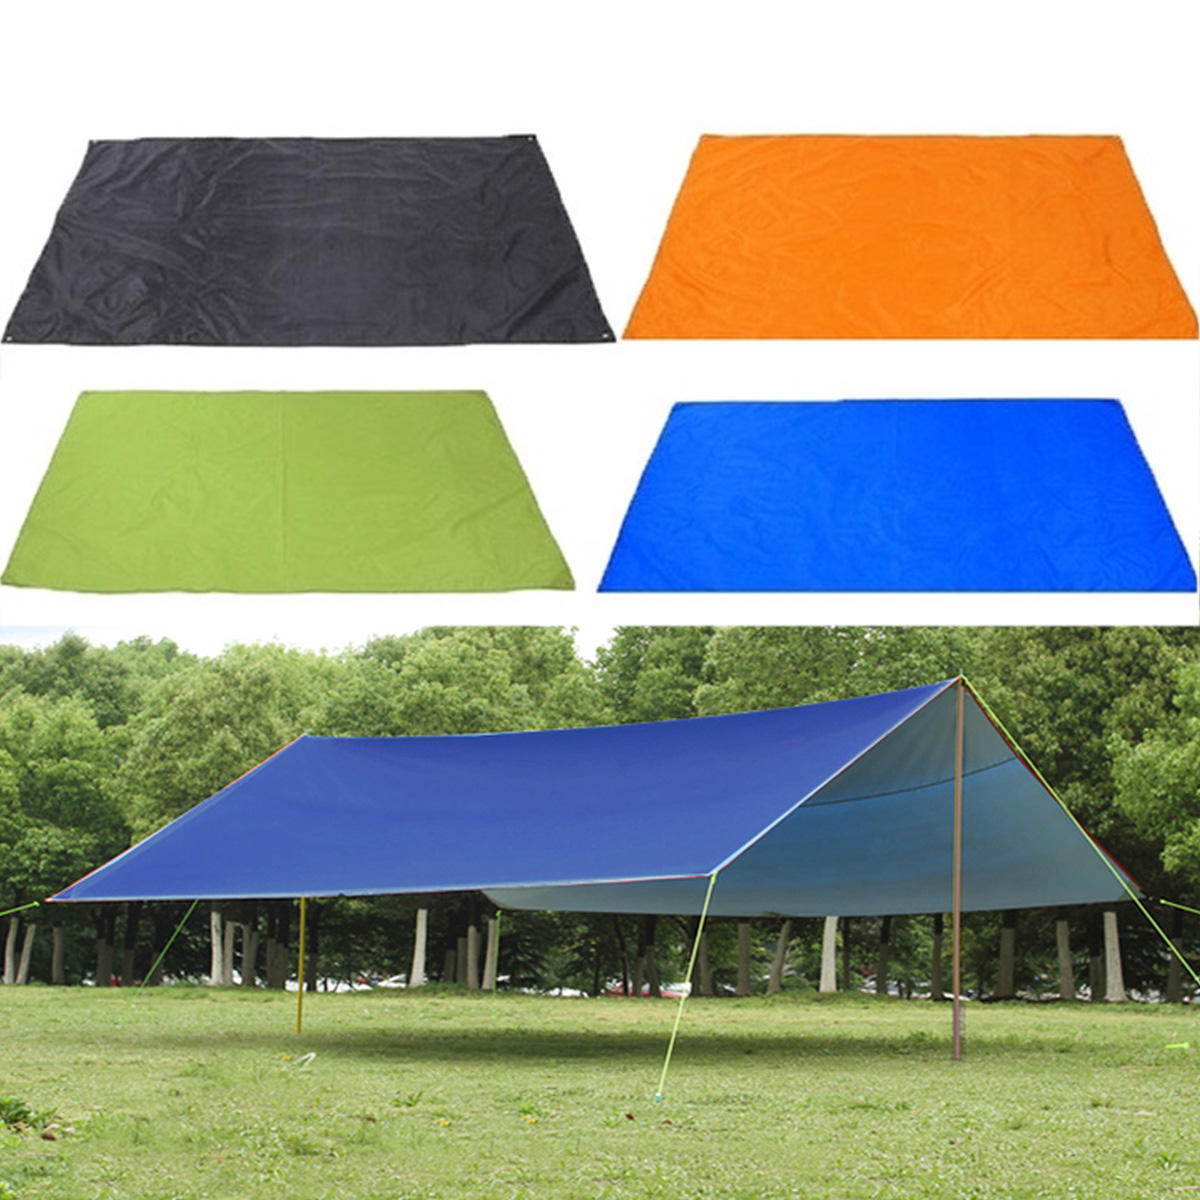 210x150cm Outdoor Camping Tent Tarp Sunshade Rain Shelter Awning Waterproof Picnic Mat